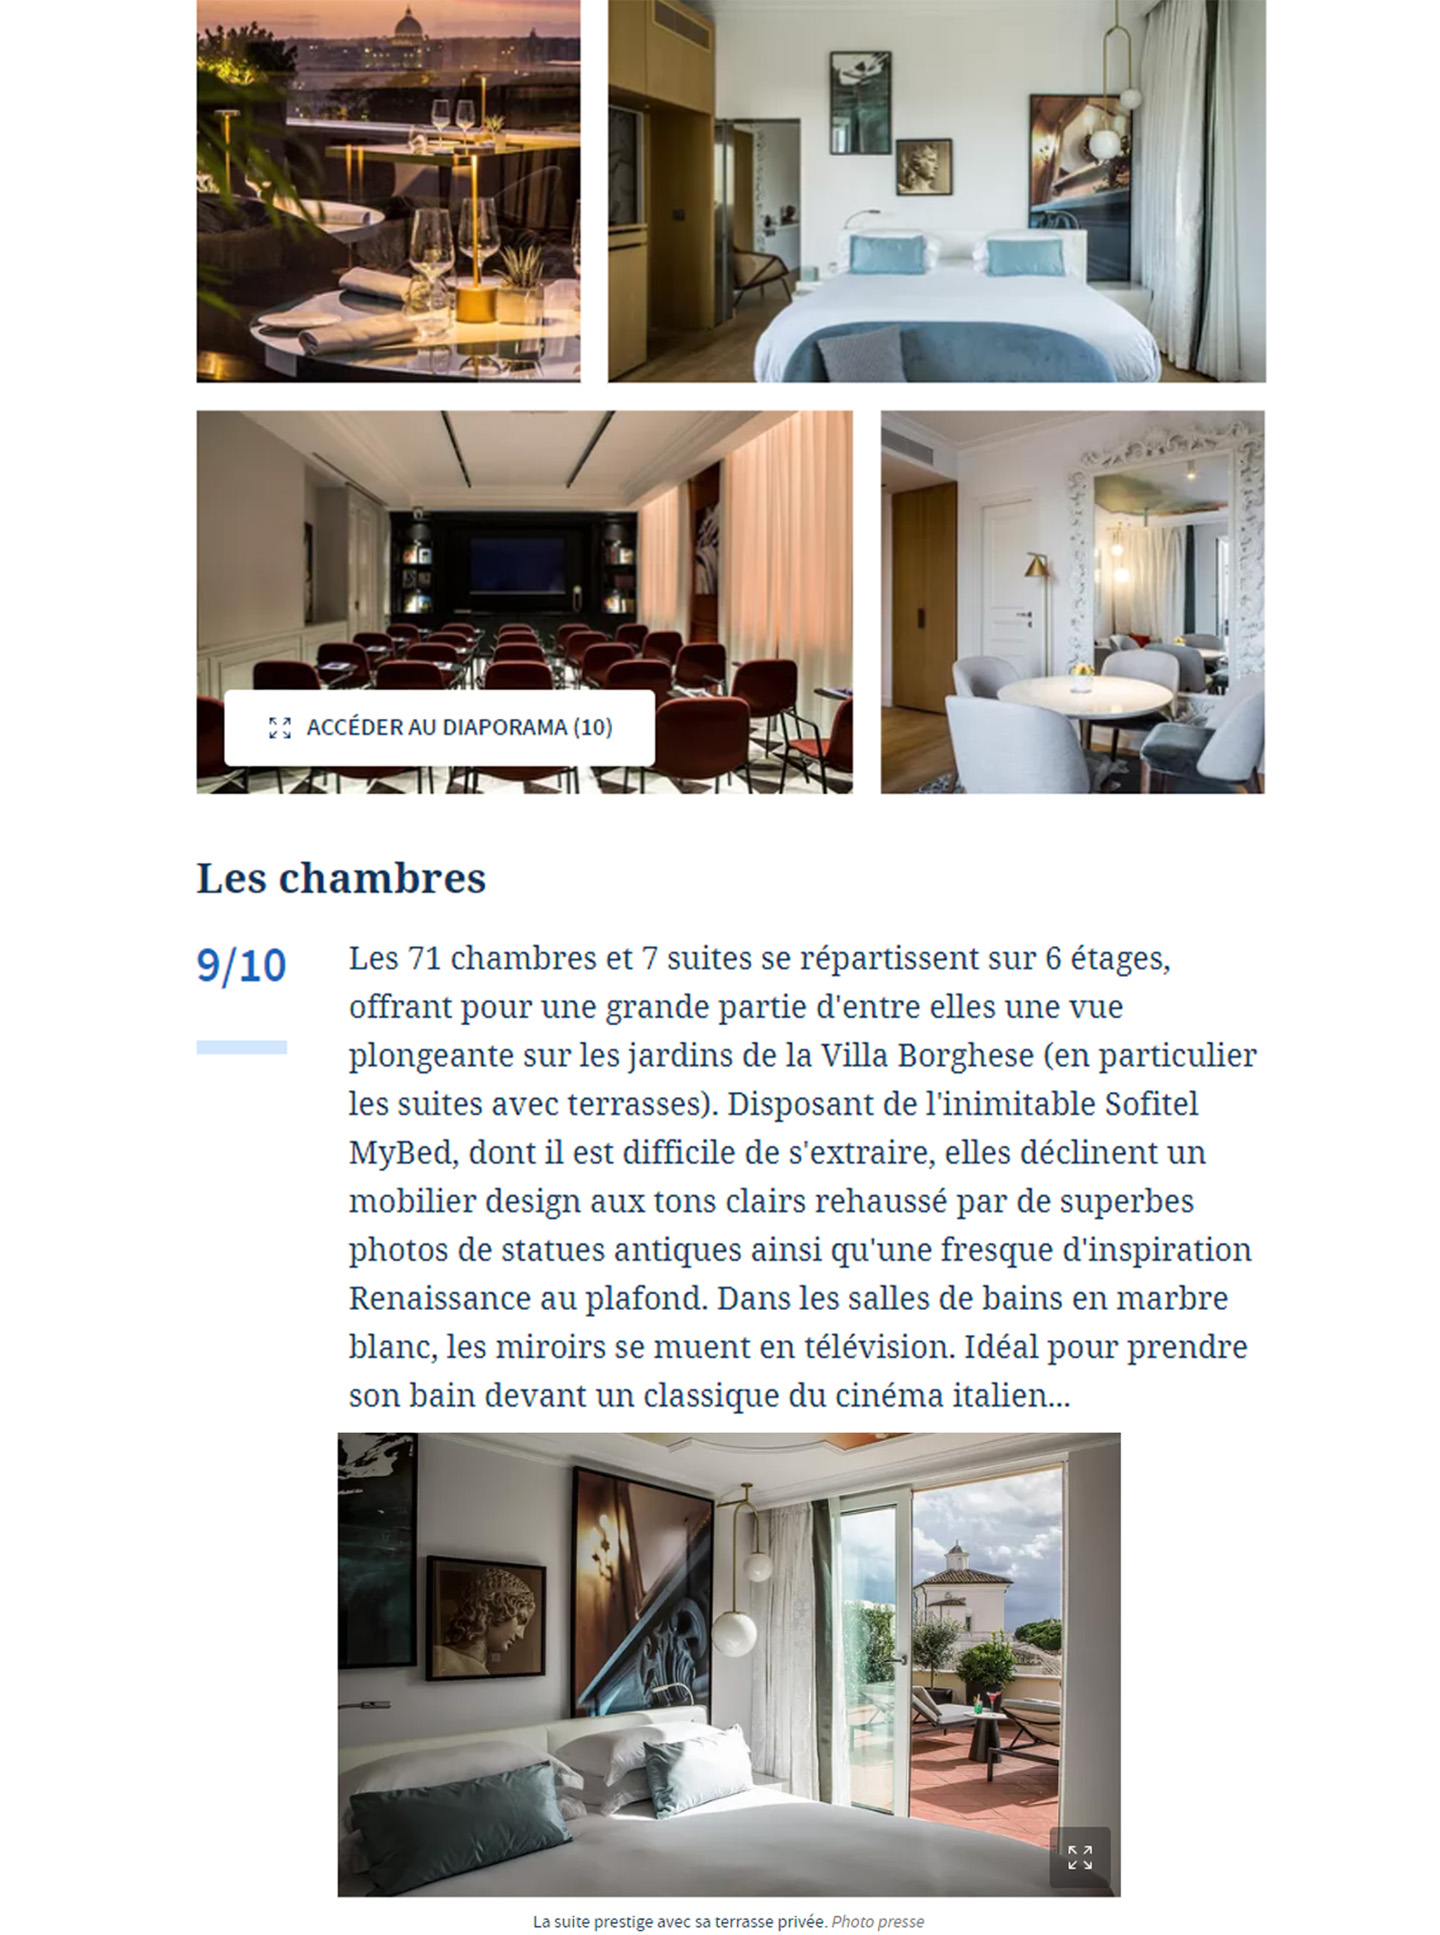 Article on the sofitel rome villa borghese in the figaro, hotel renovated and decorated by the interior design studio jean-philippe nuel